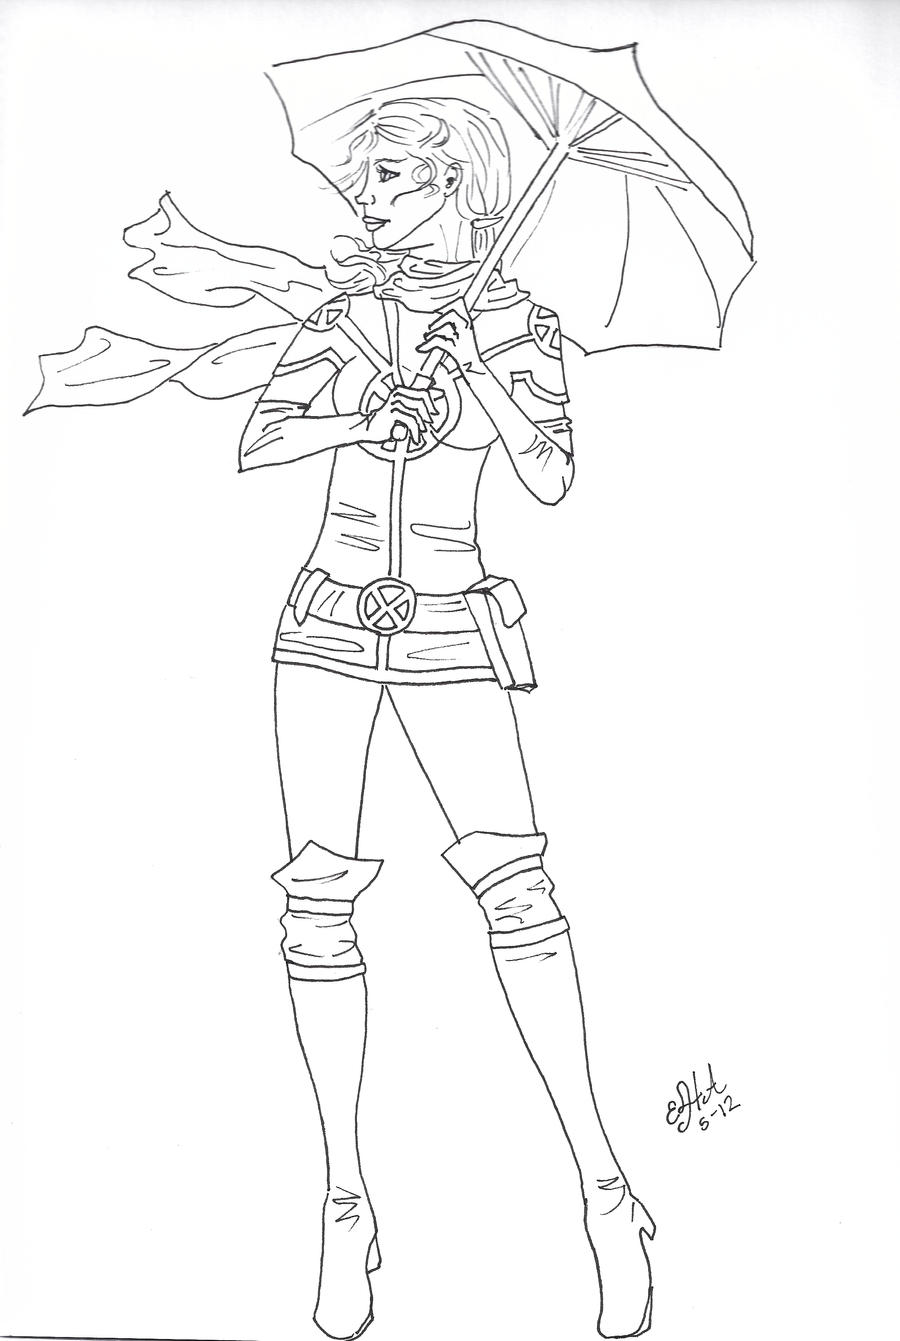 Rogue with Umbrella (Line art)